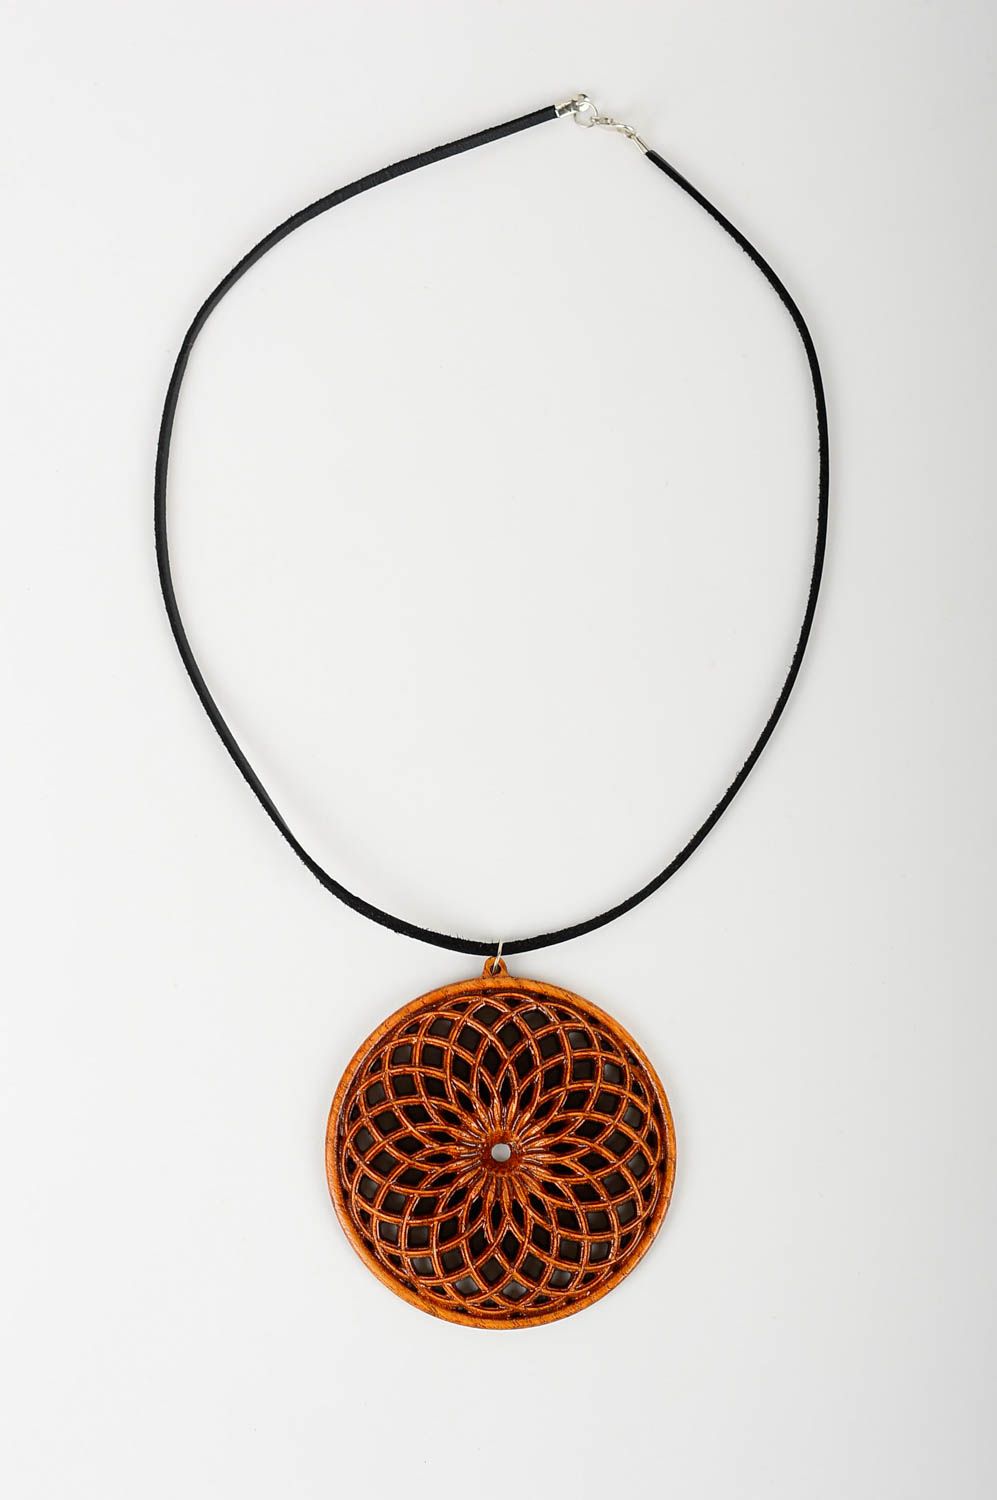 Unusual pendant wooden pendant female pendant women pendant gift ideas photo 2